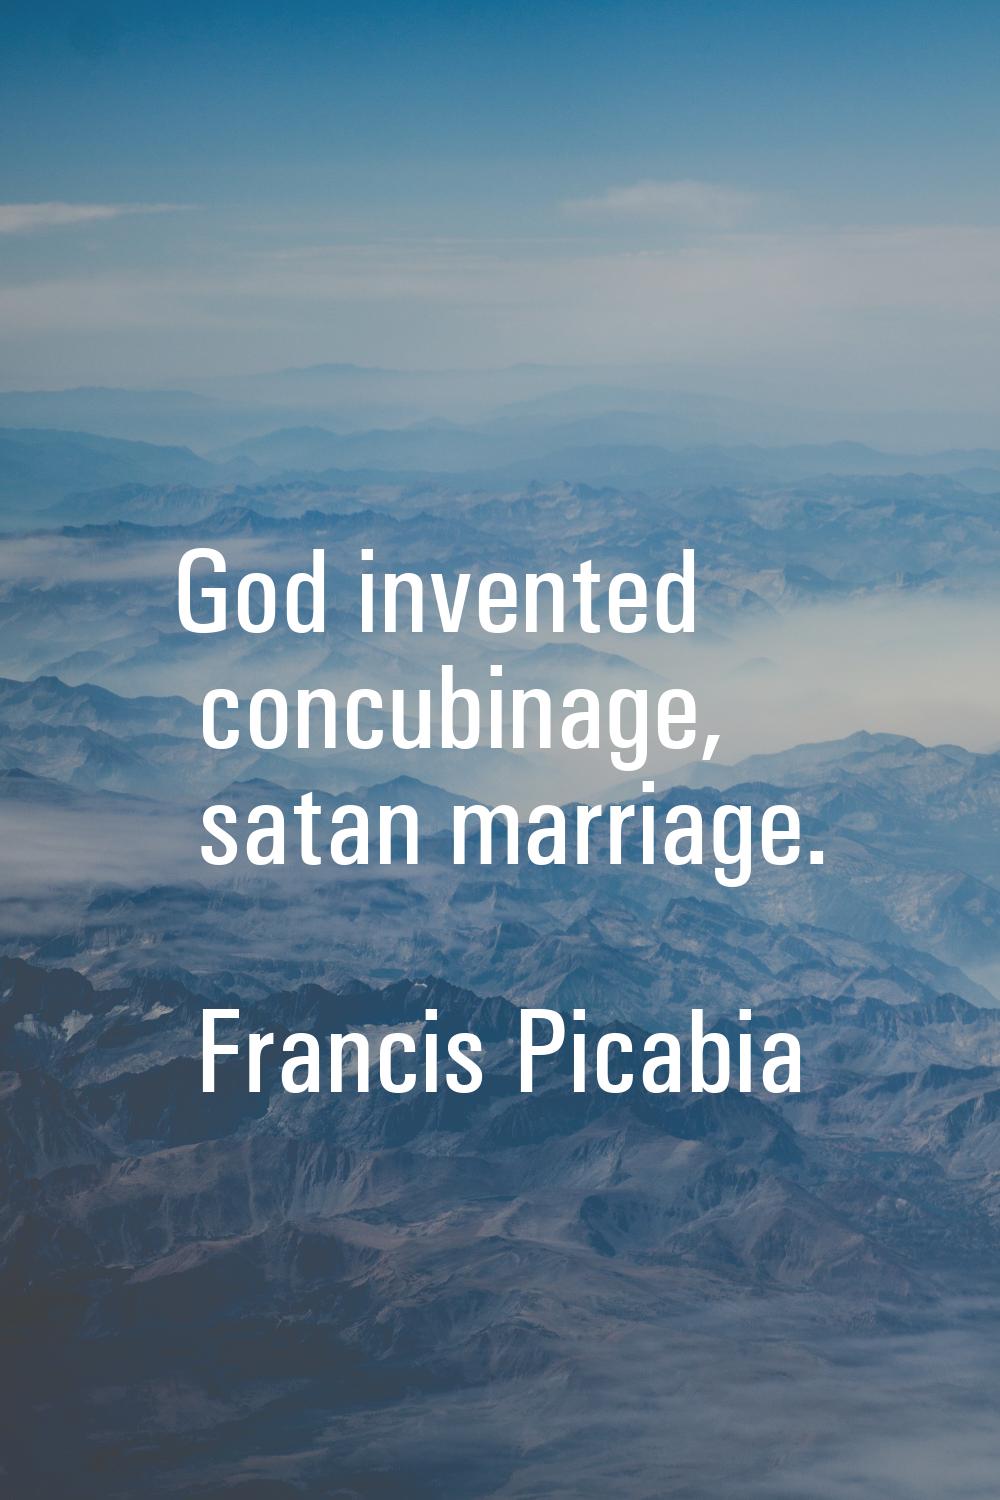 God invented concubinage, satan marriage.